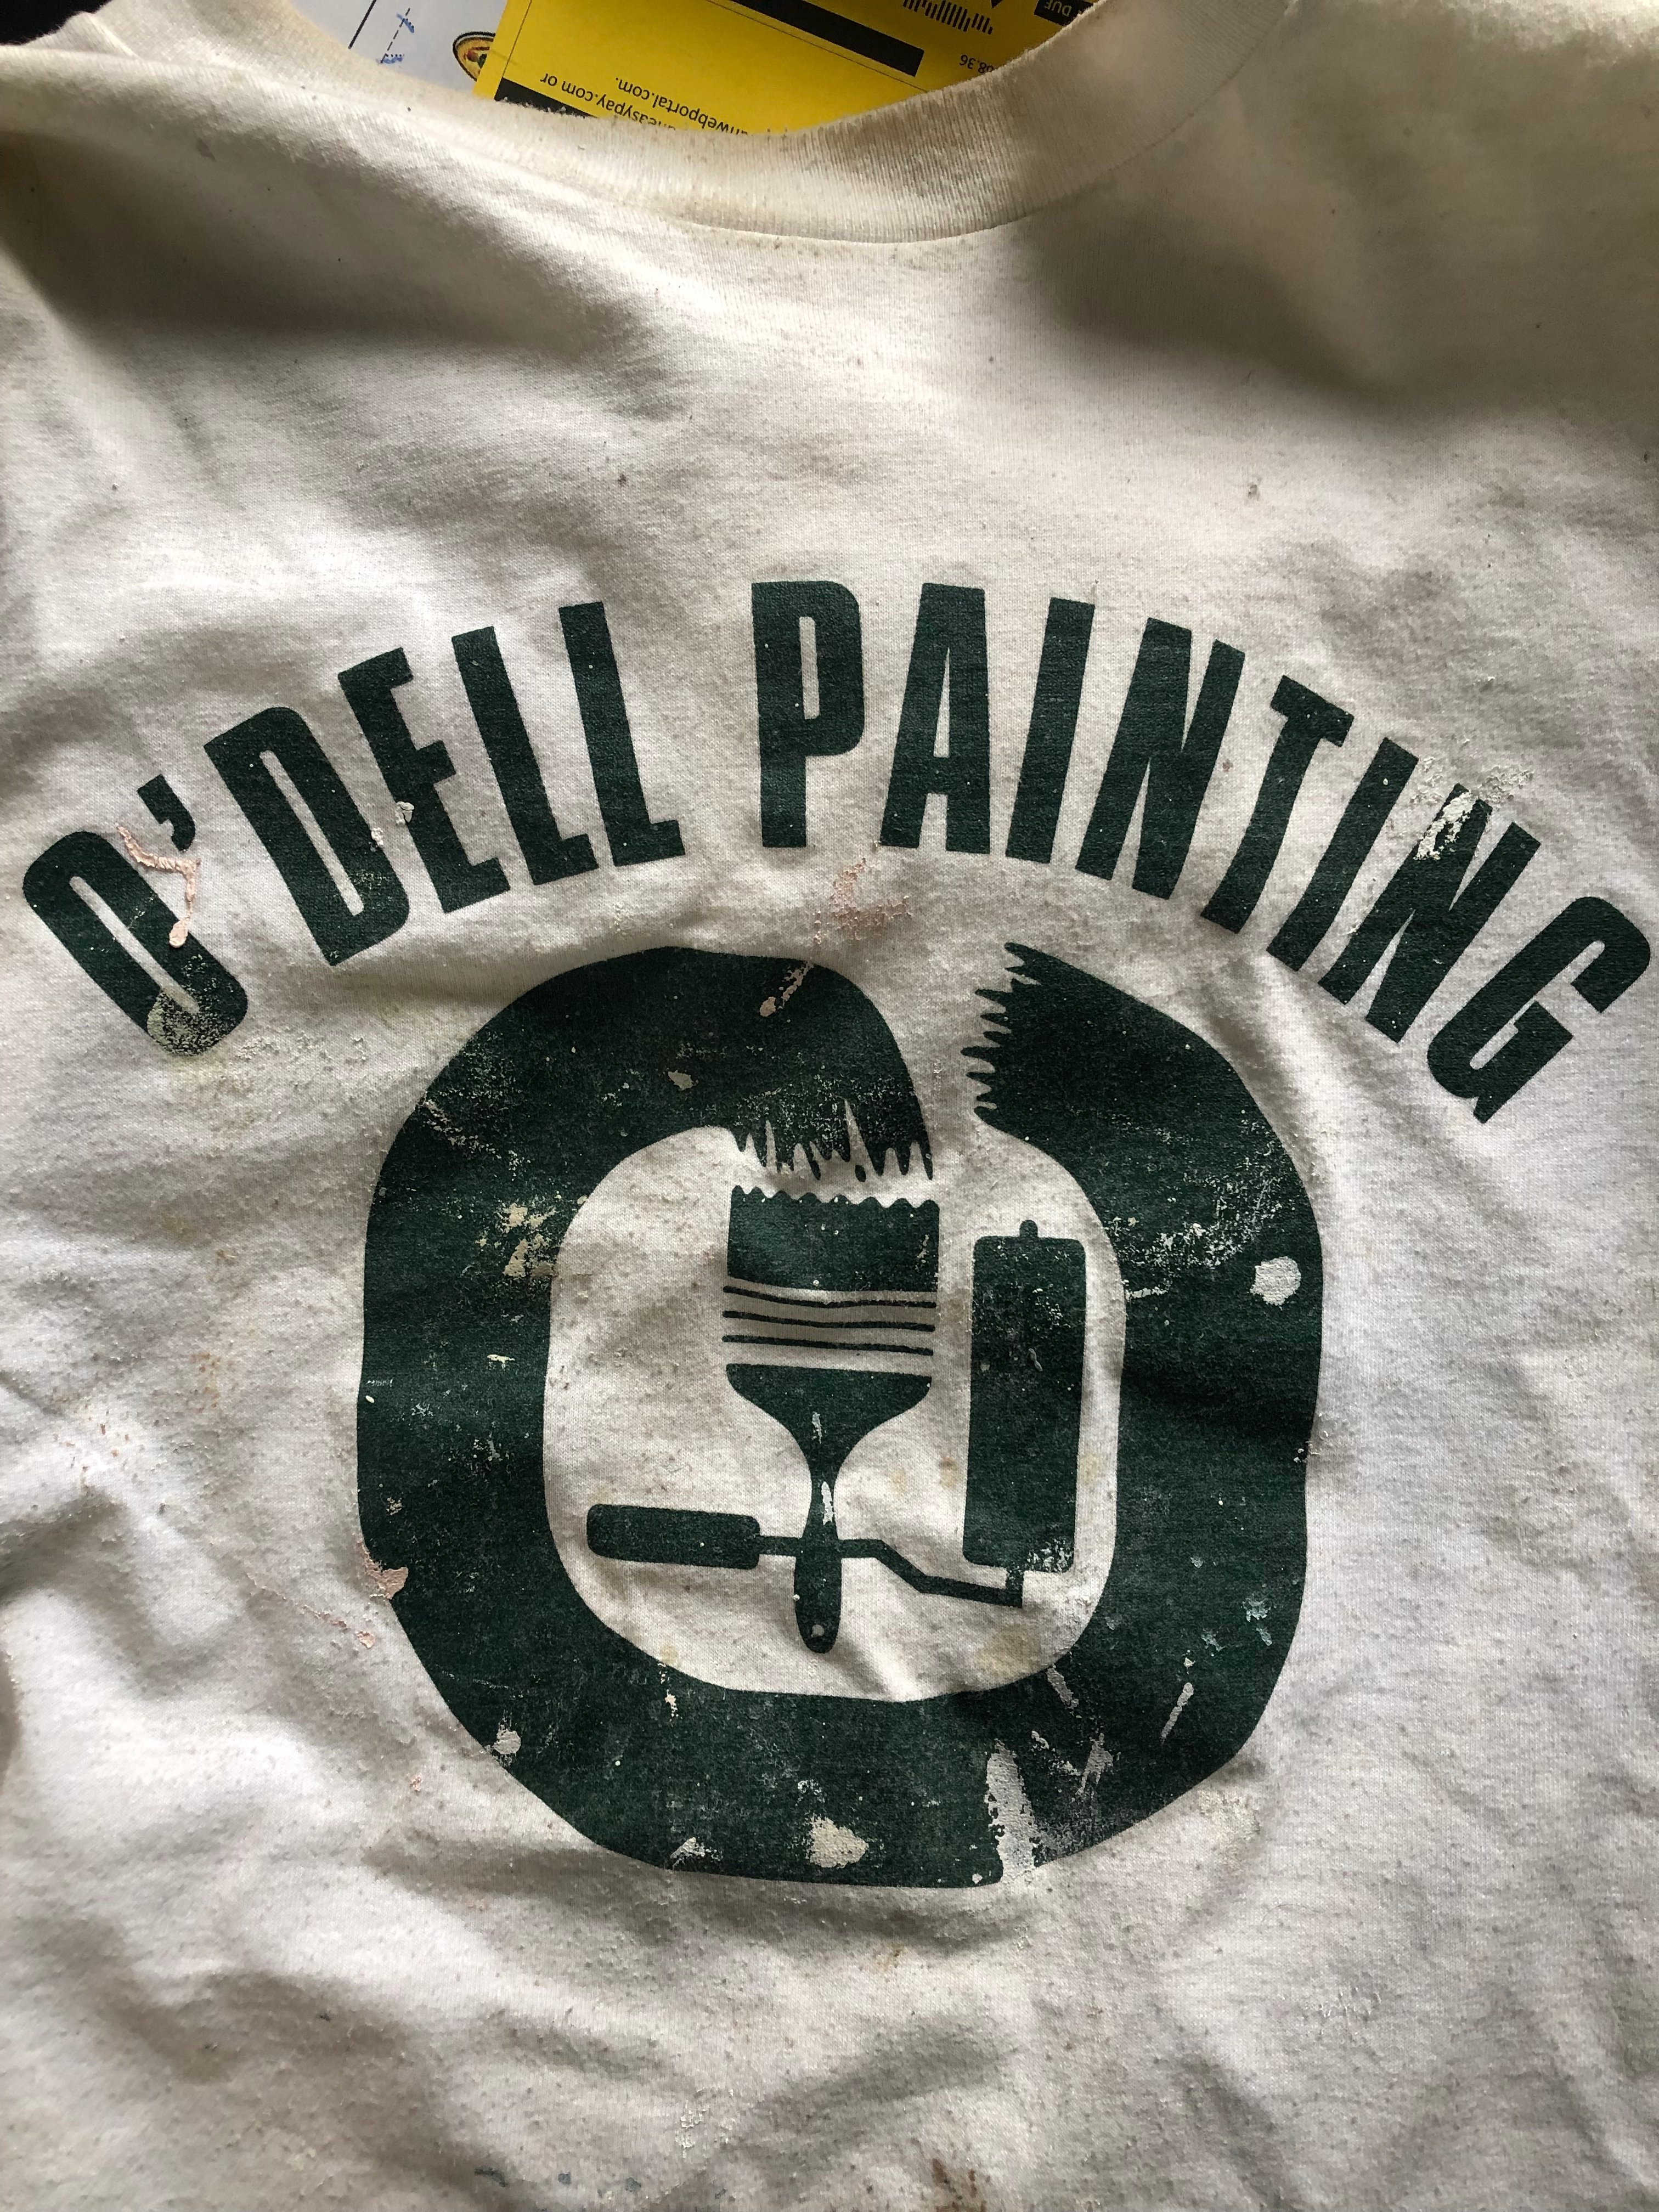 O'Dell Painting Logo